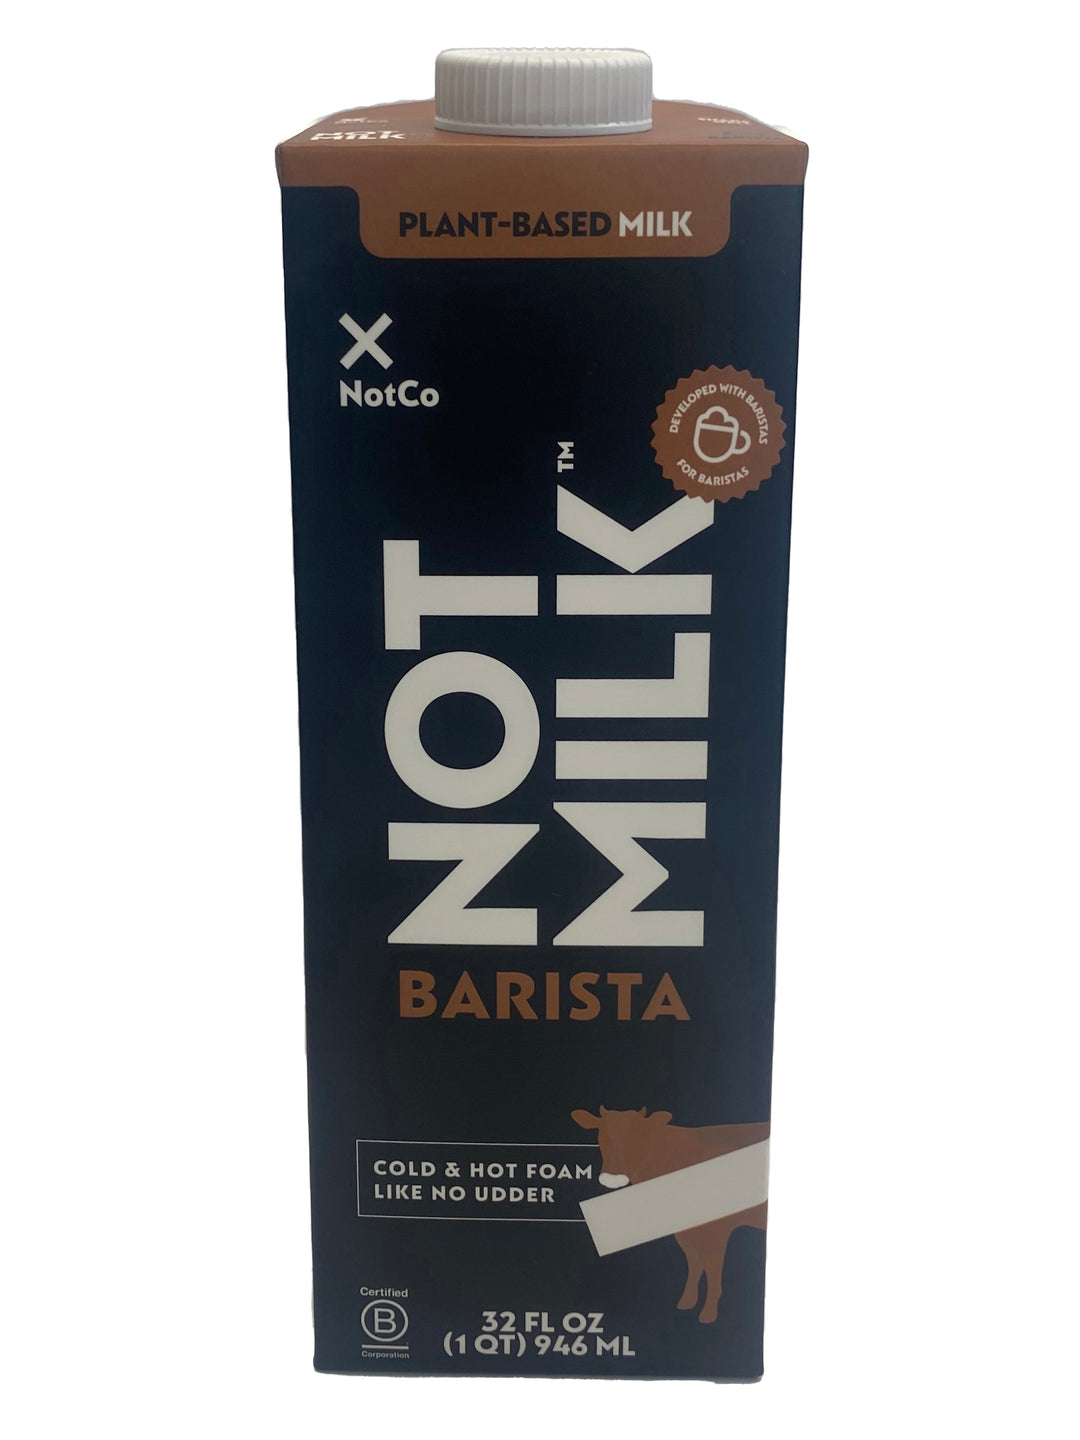 Not Co Notmilk Barista-Shelf-Stable Plant-Based Milk-32 fl. oz.-6/Case